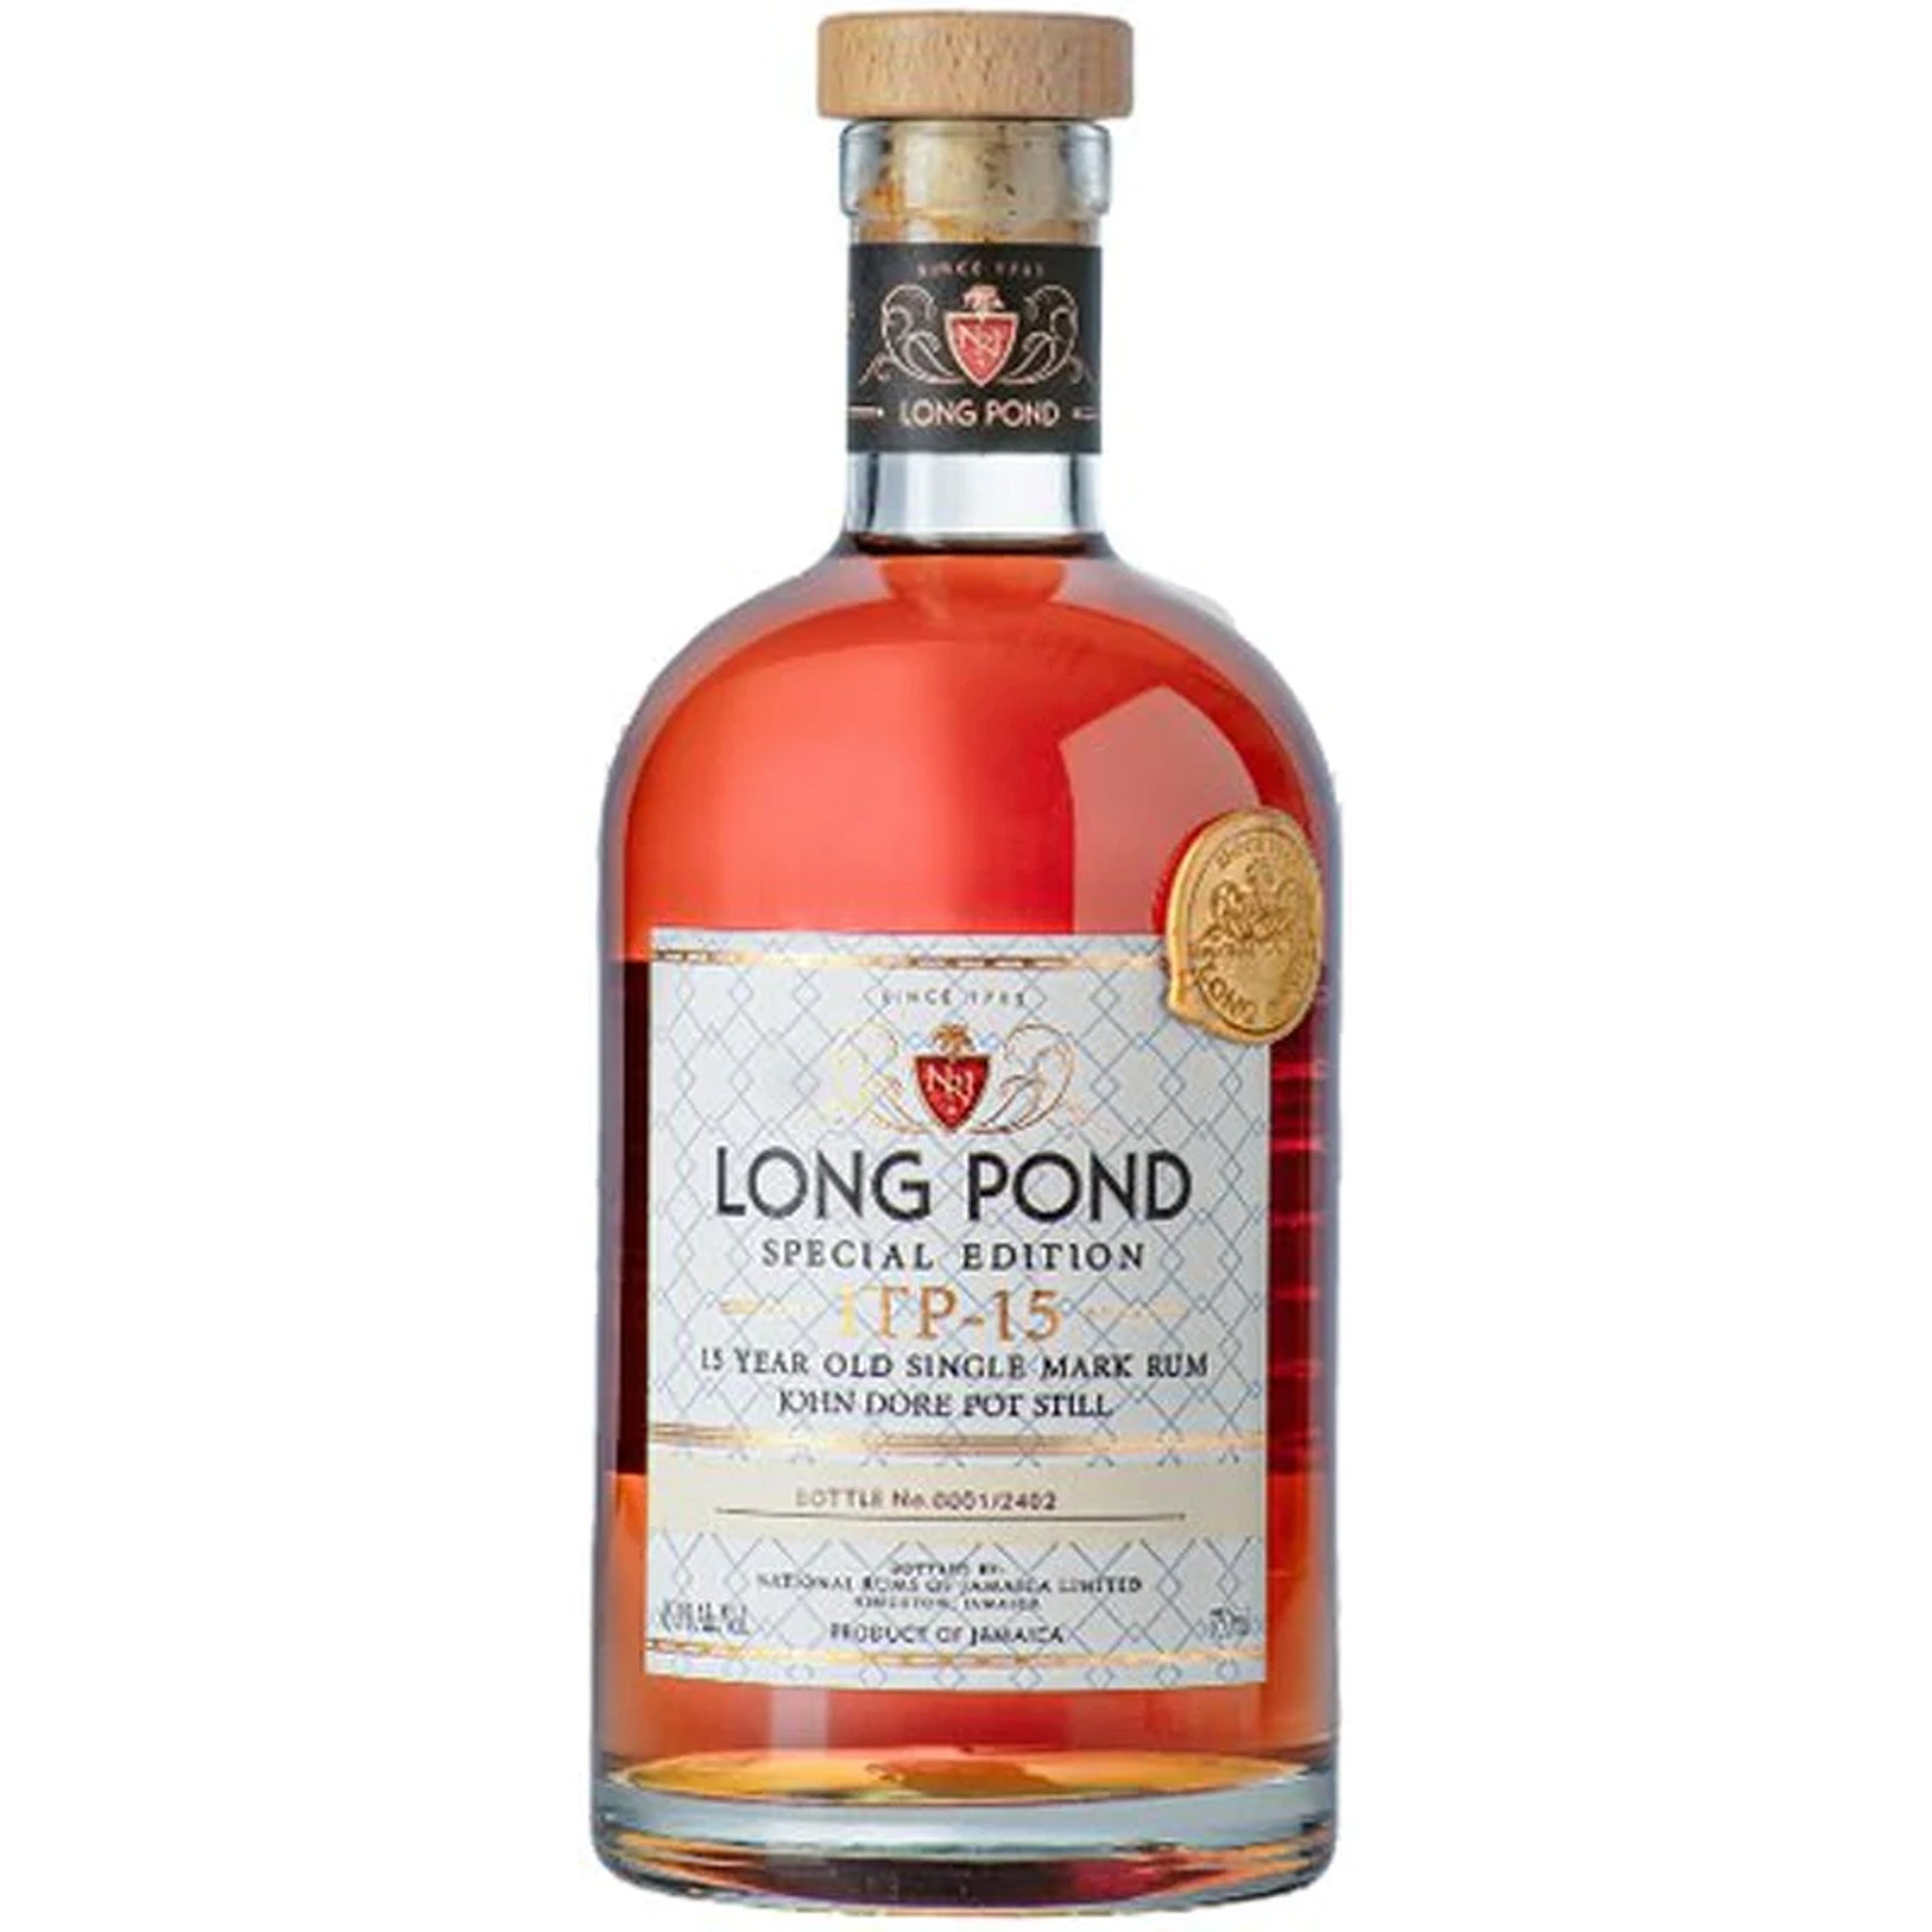 Long Pond Gold Rum ITP-15 John Dore Pot Still Rum